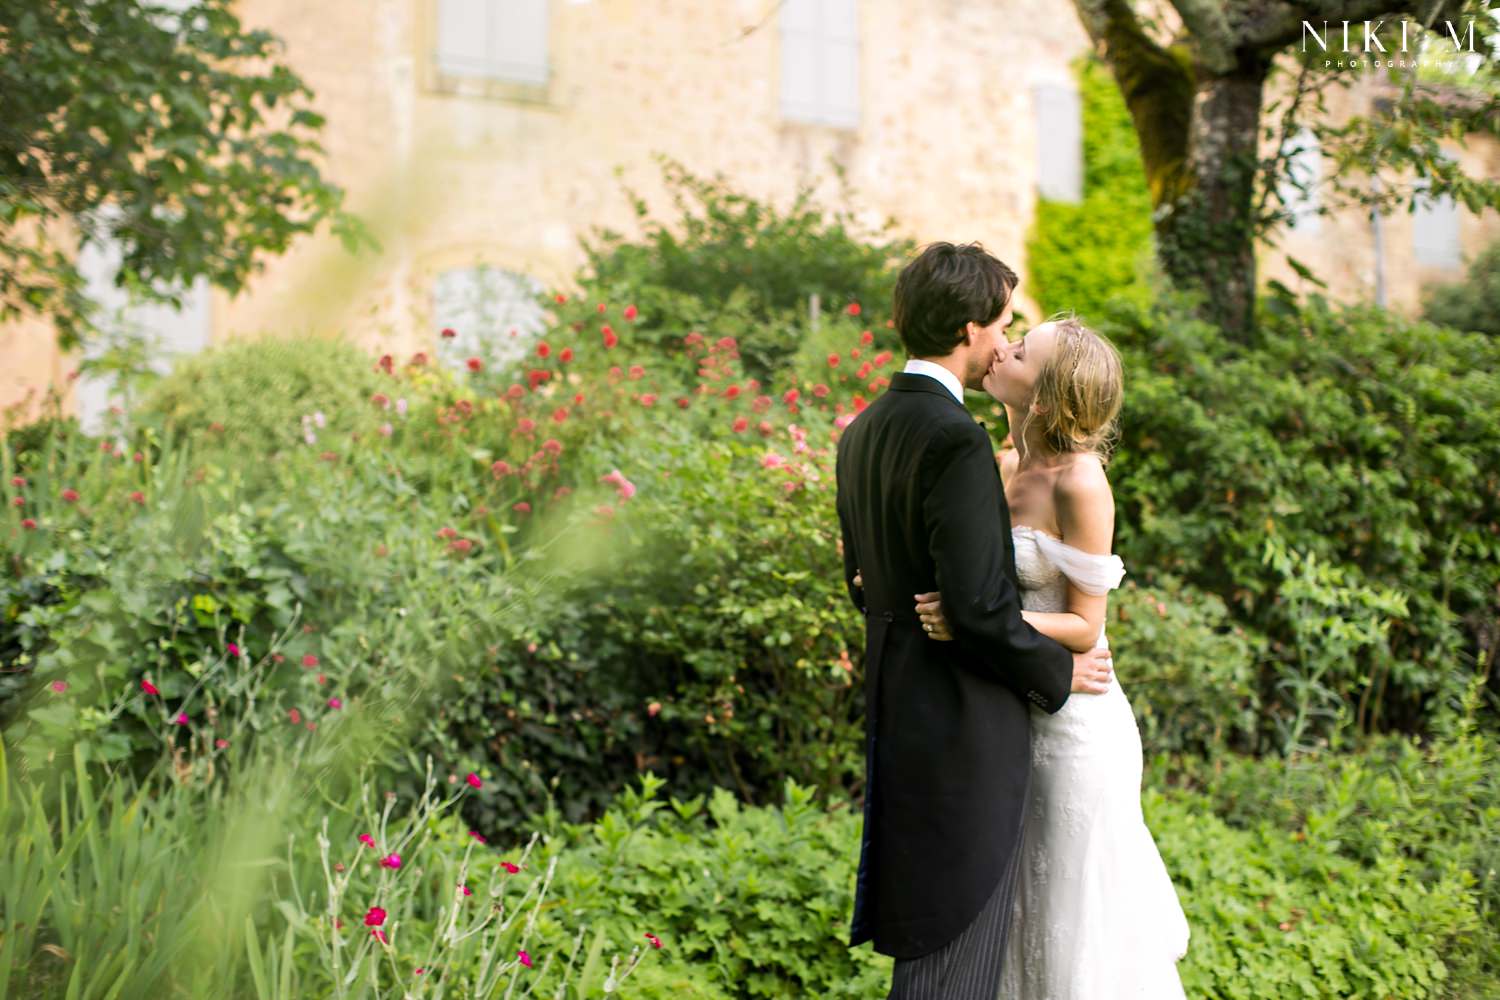 French countryside gardens at Dordogne wedding venue Chateau de la Bourlie